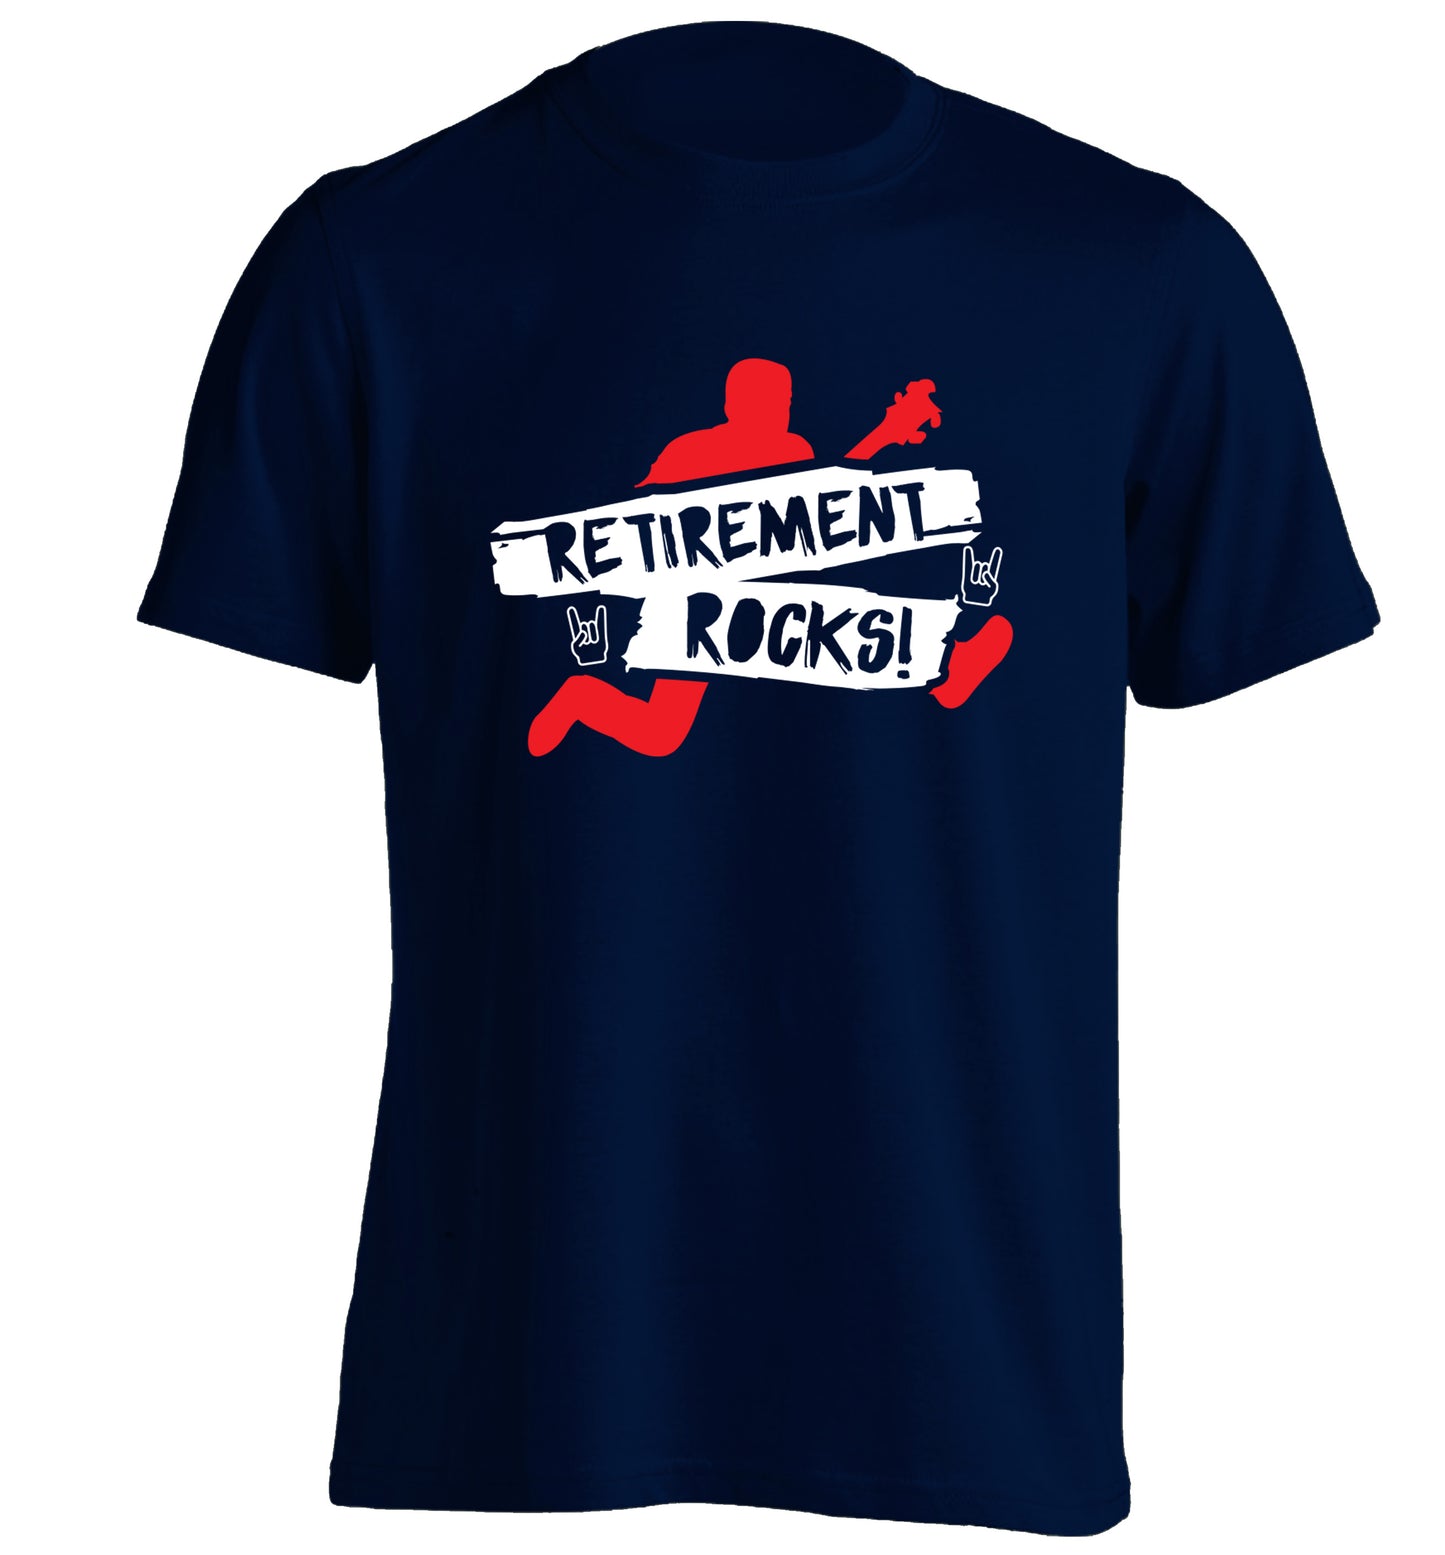 Retirement Rocks adults unisex navy Tshirt 2XL